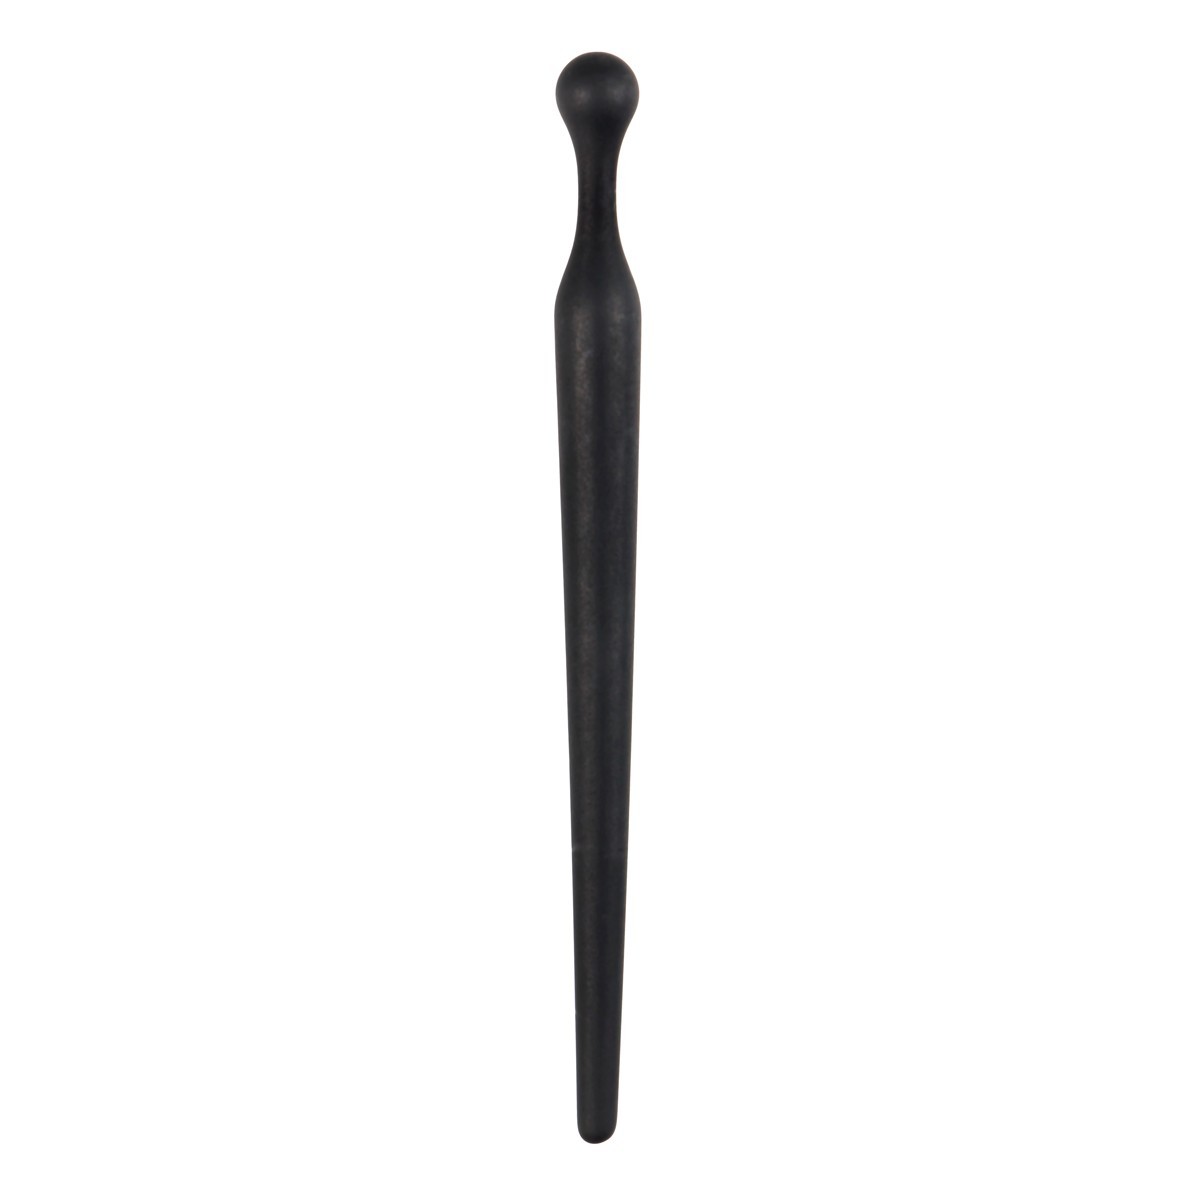 Sinner Gear Smooth Silicone Penis Plug 3–7 mm